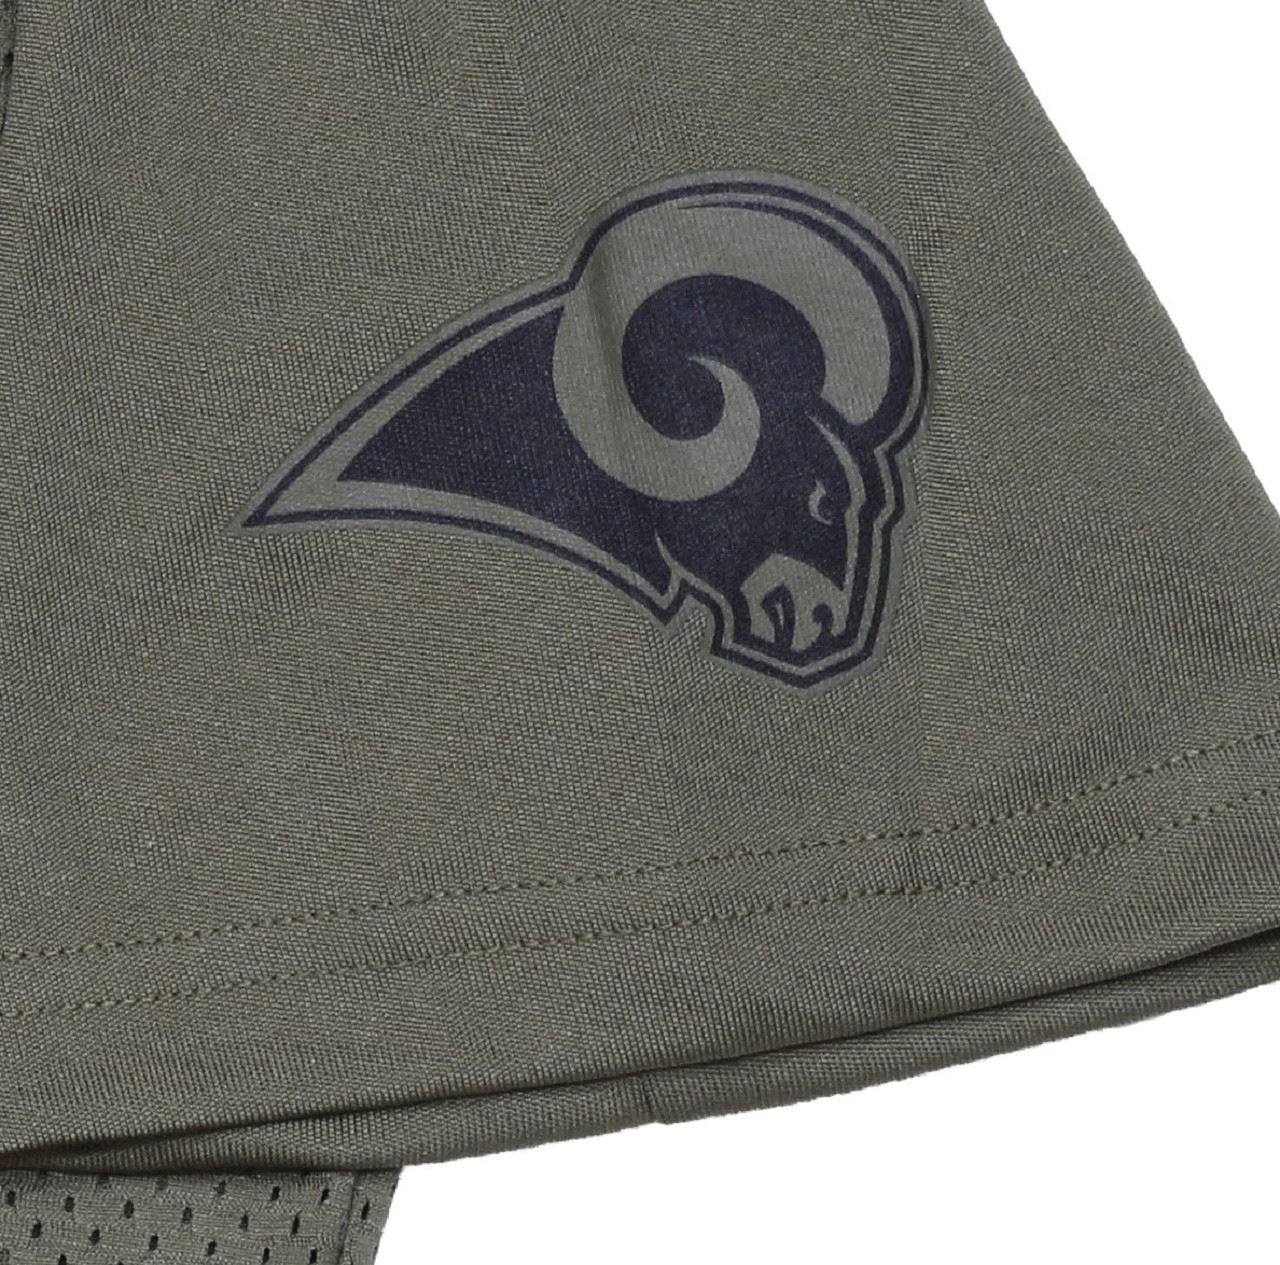 Los Angeles Rams NFL Camo Jersey T-Shirt New Era